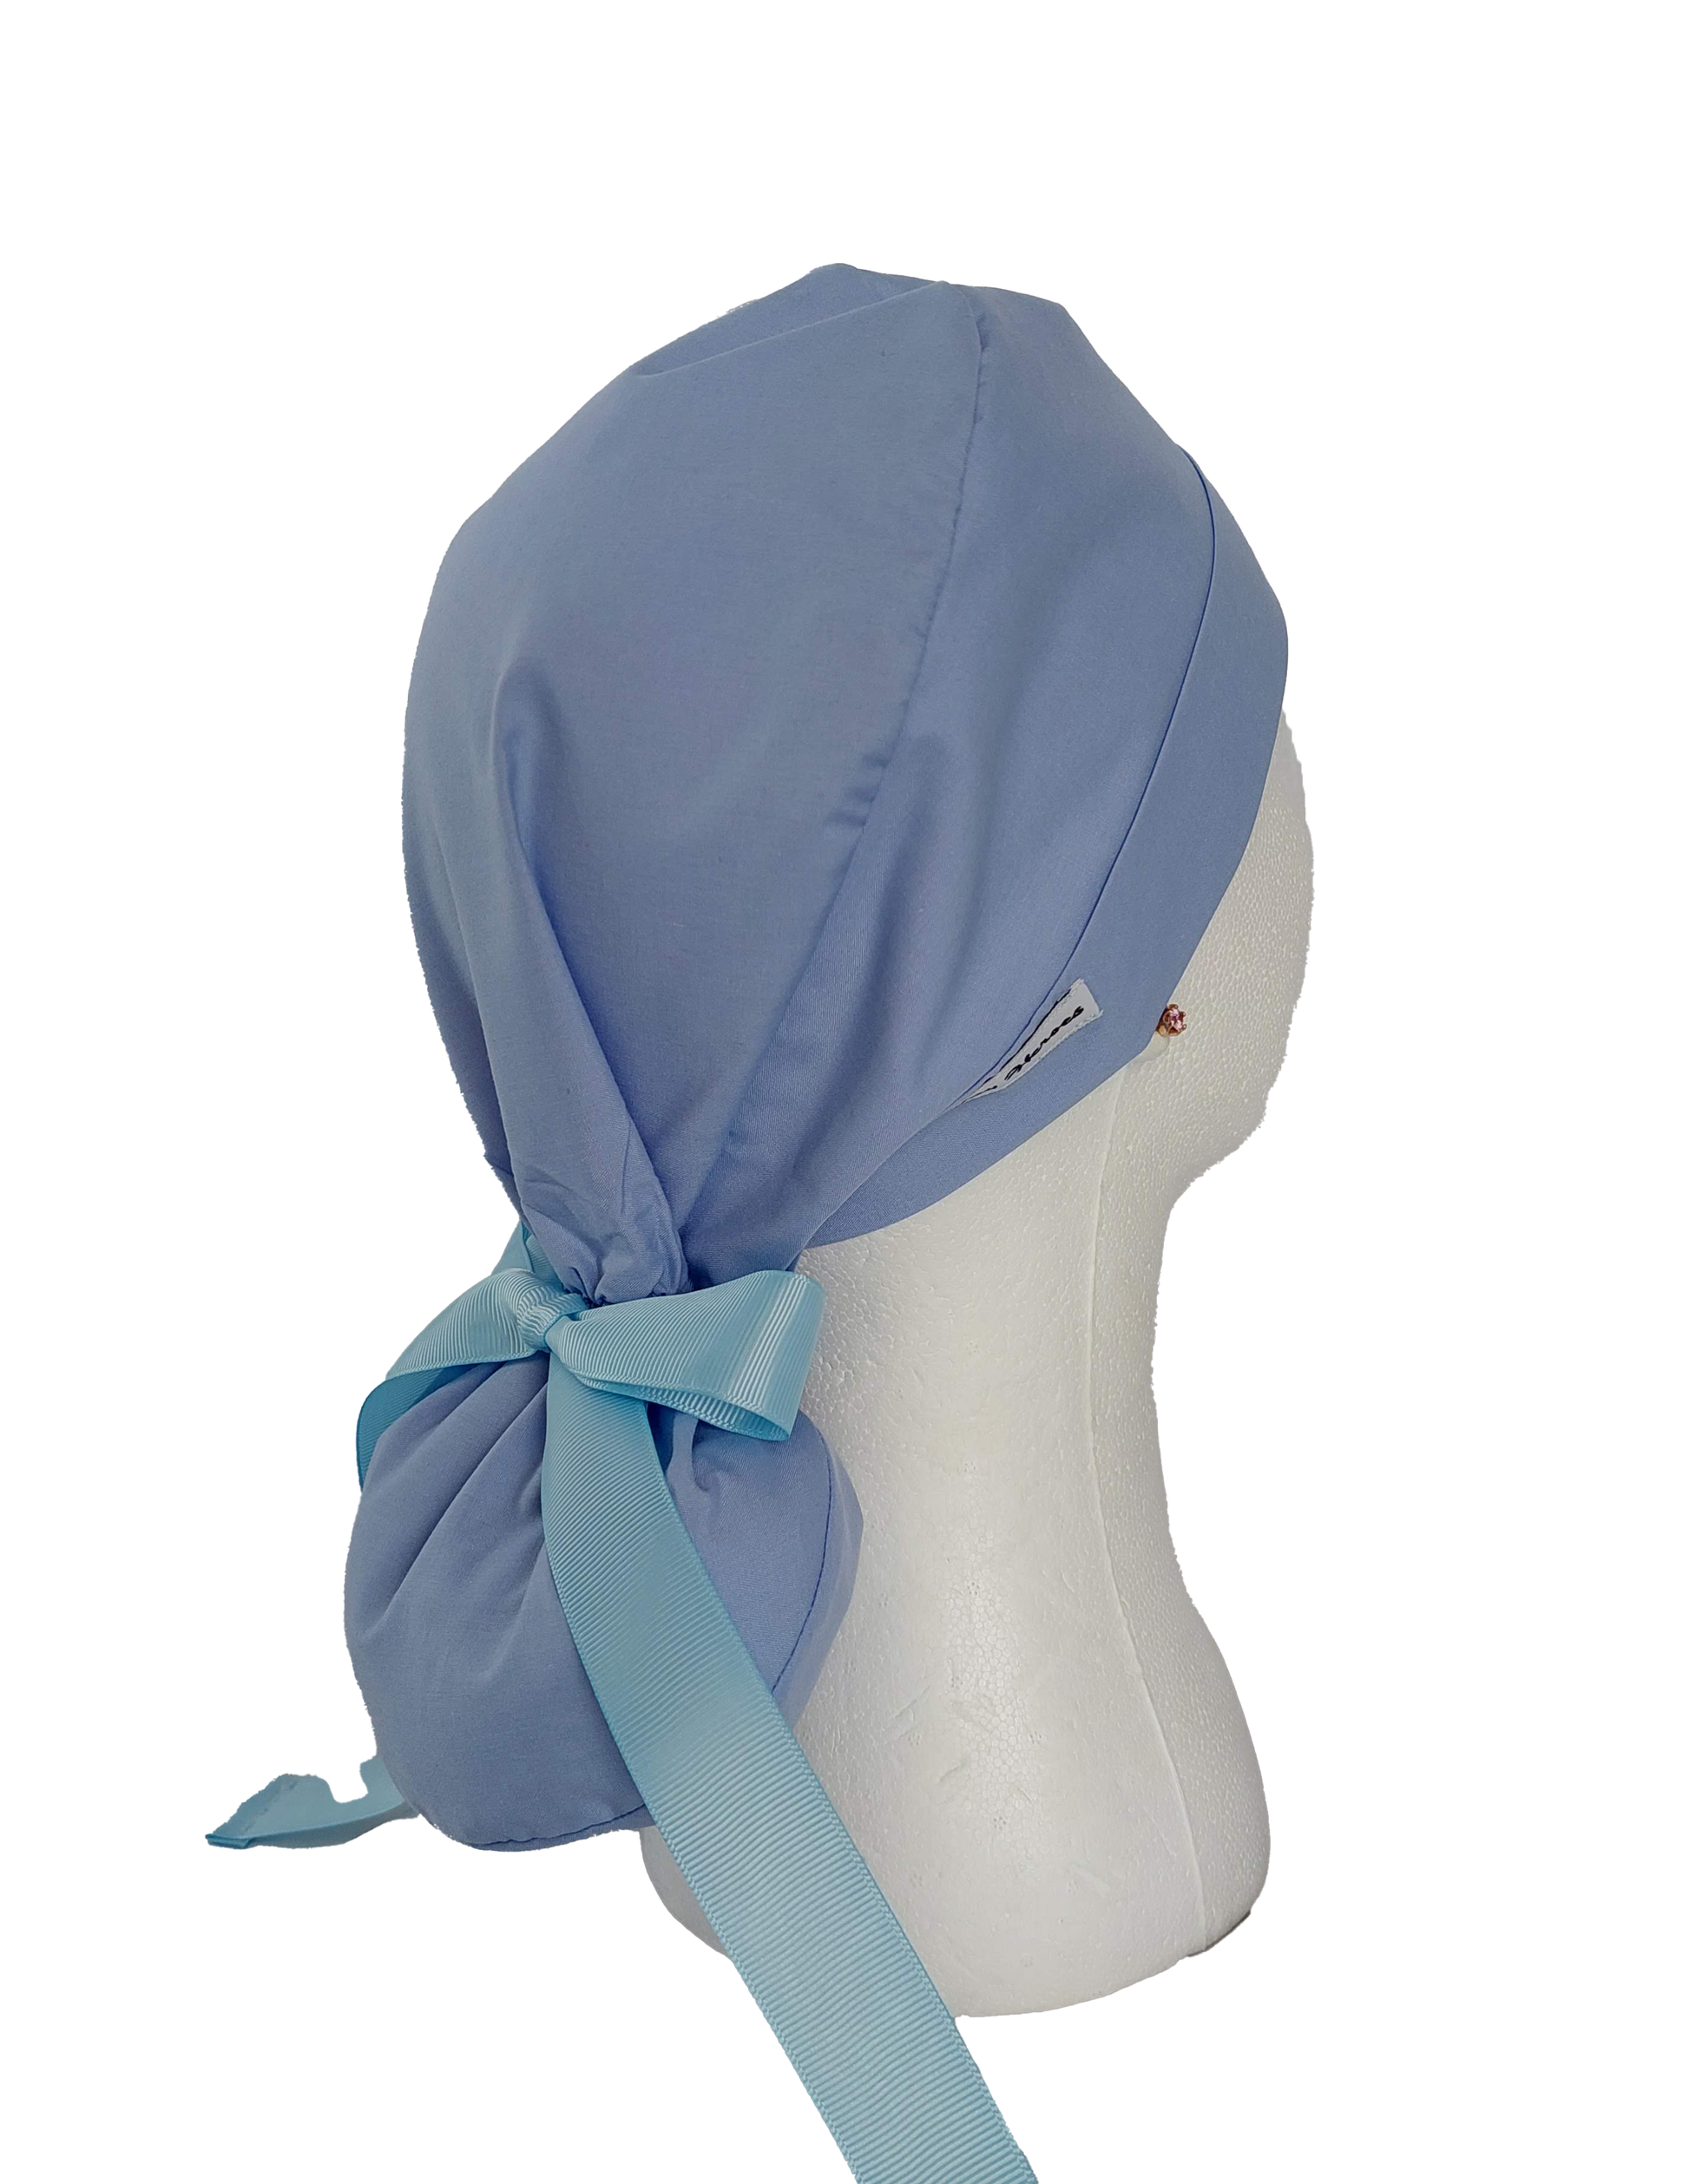 Ponytail Scrub Cap -  Surgical Cap Solid Light Blue - [scrub_hat]-[scrub_cap_for_women]-[surgical_cap]